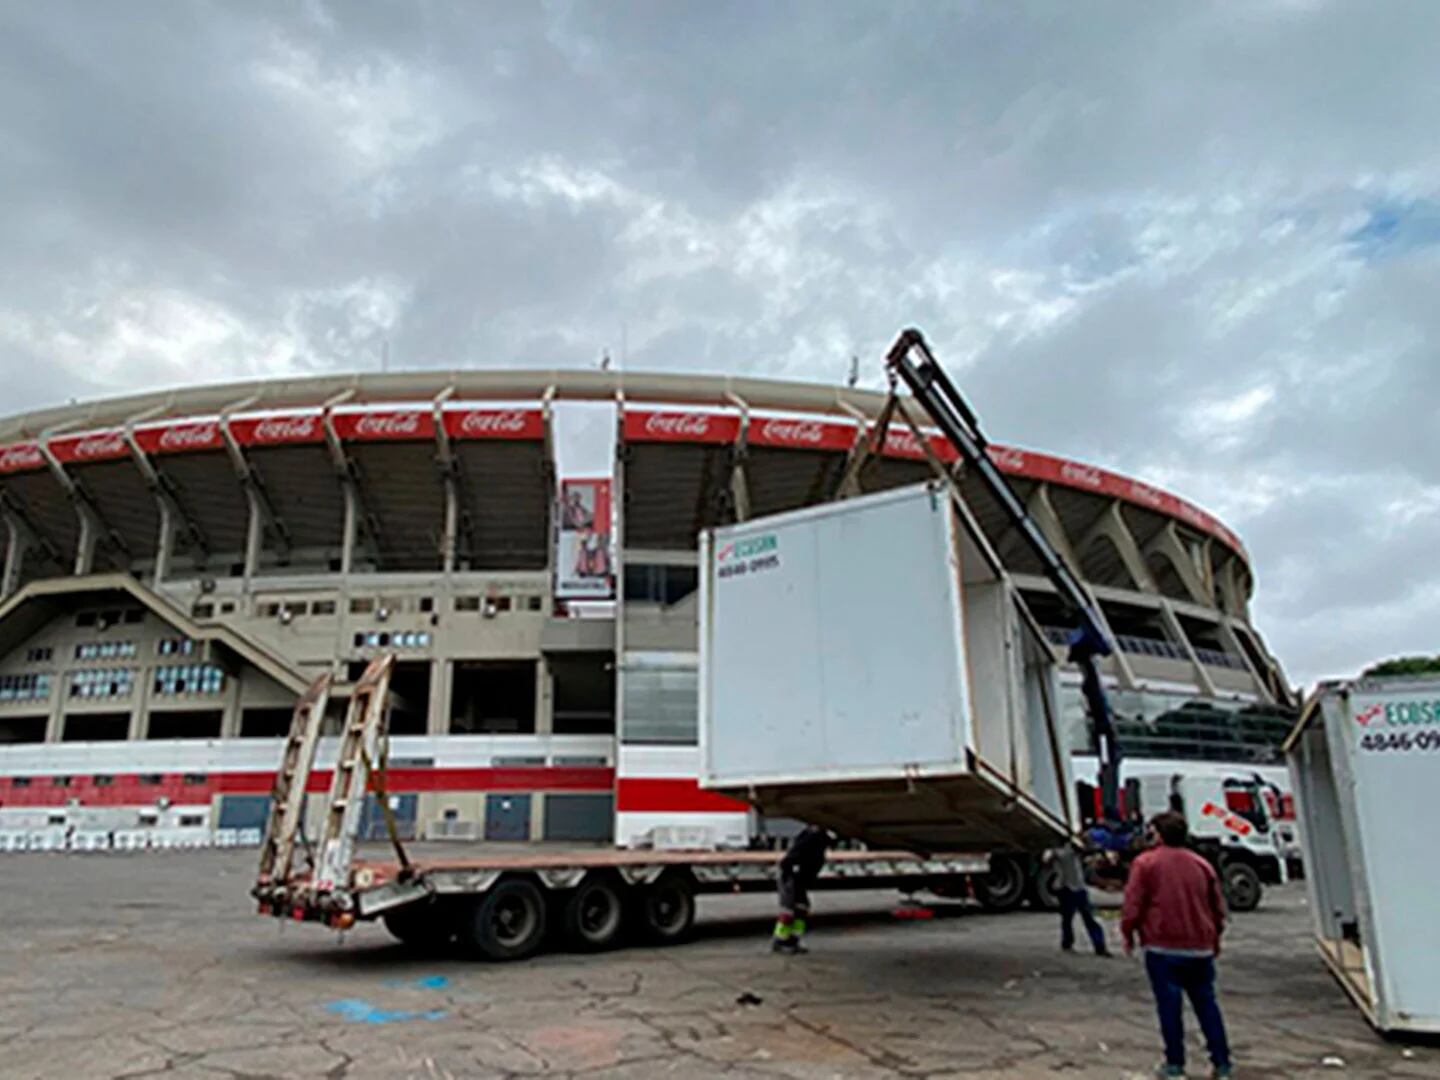 But de foot à 11 mobile River Plate Maracana - Metalu Plast